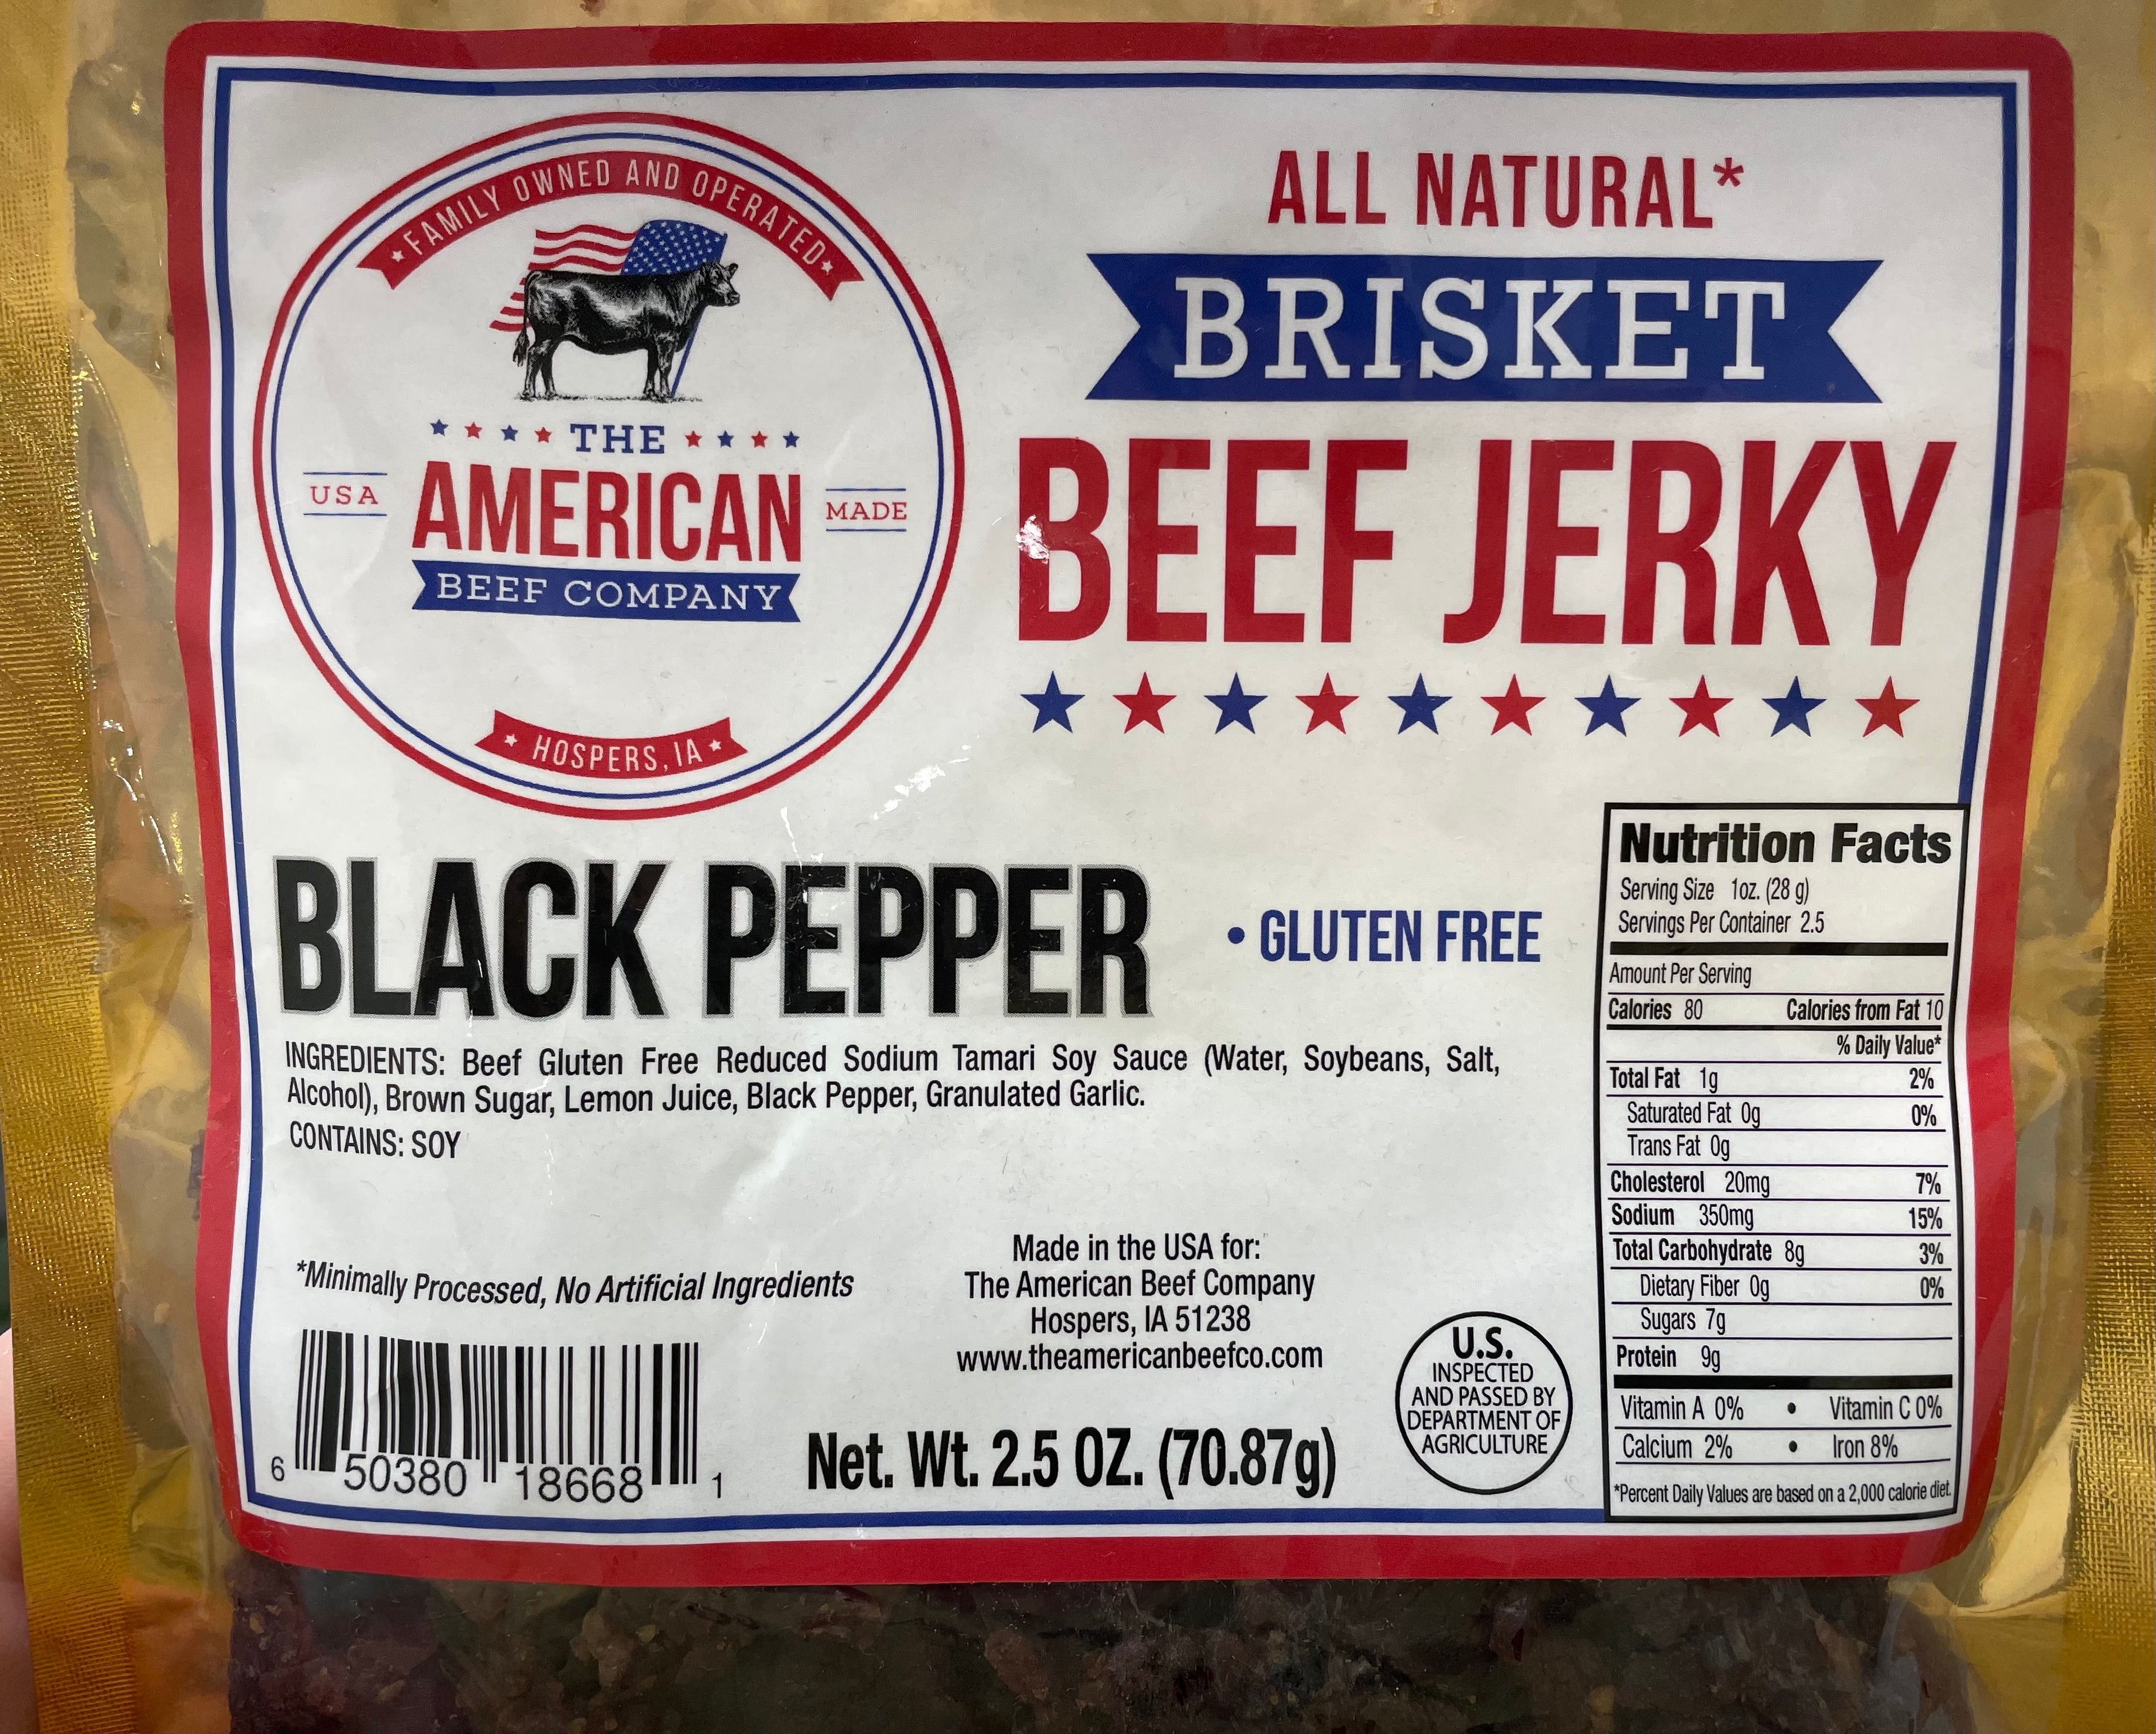 American Beef Company Brisket Beef Jerky